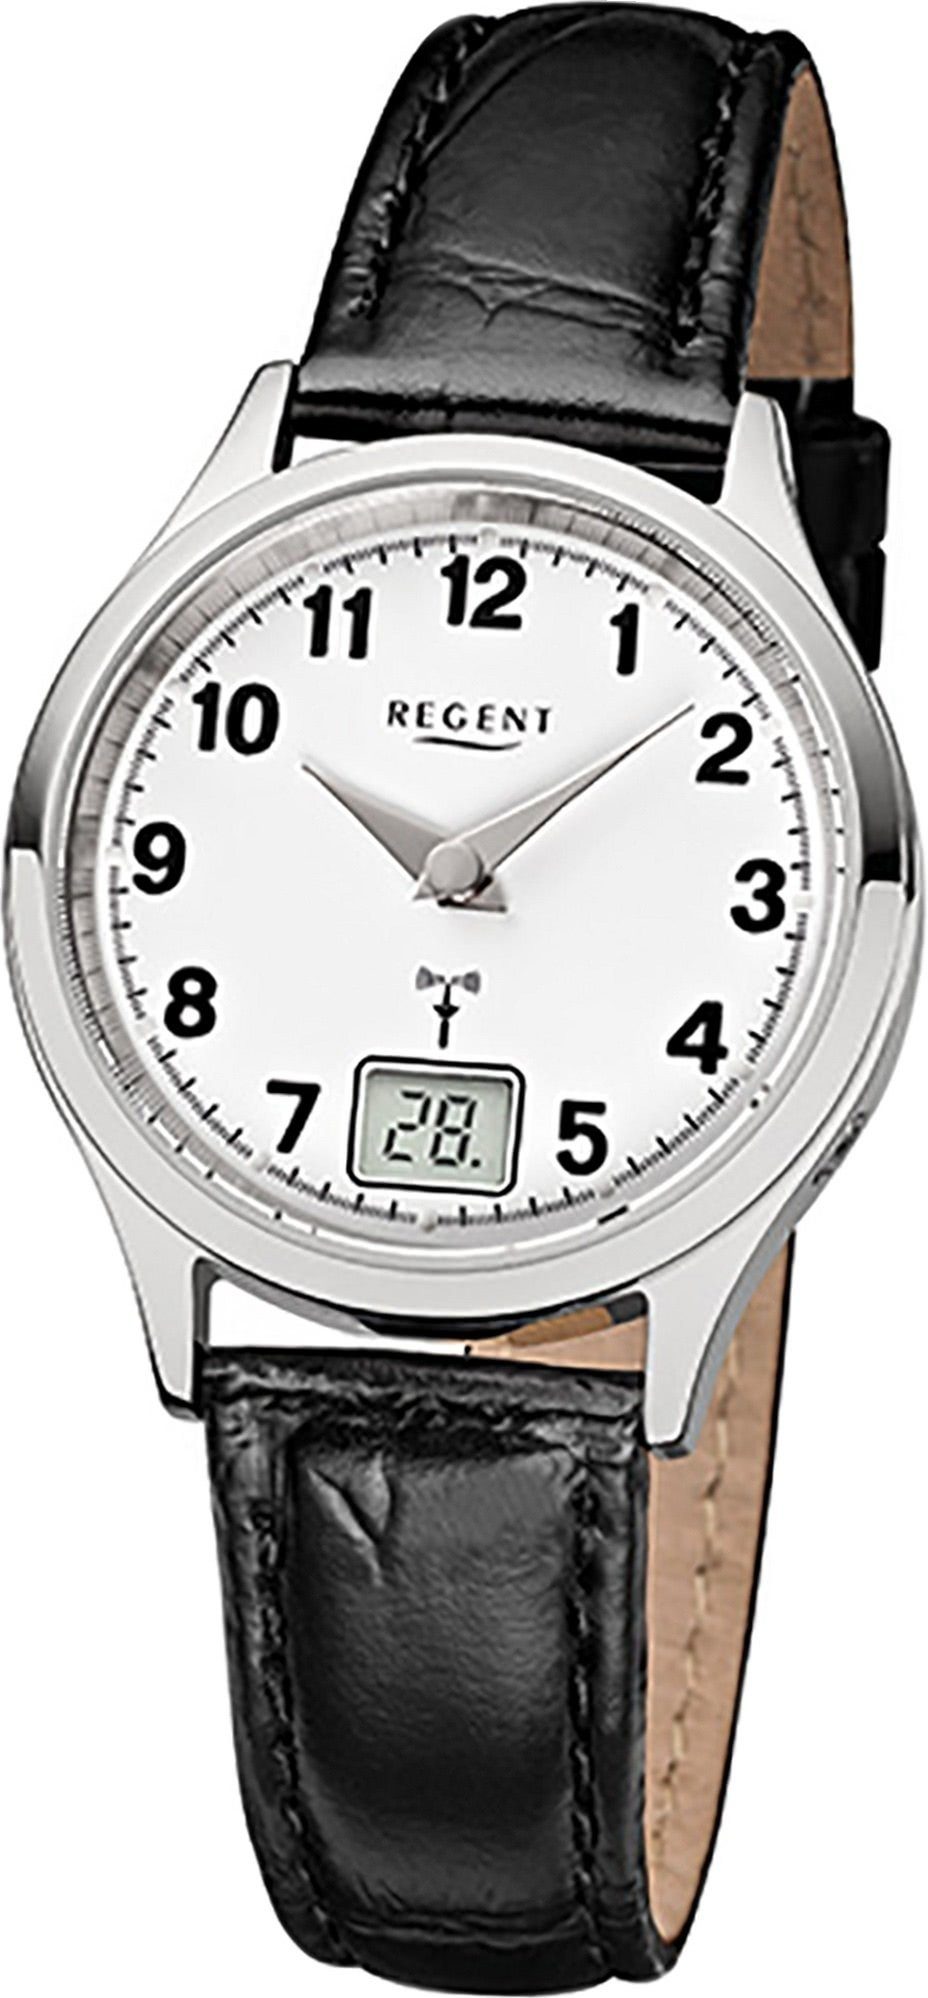 Regent Funkuhr Regent Leder Damen Uhr FR-192 Funkuhr, Damenuhr mit Lederarmband, rundes Gehäuse, (ca. 29mm), Elegant-Style